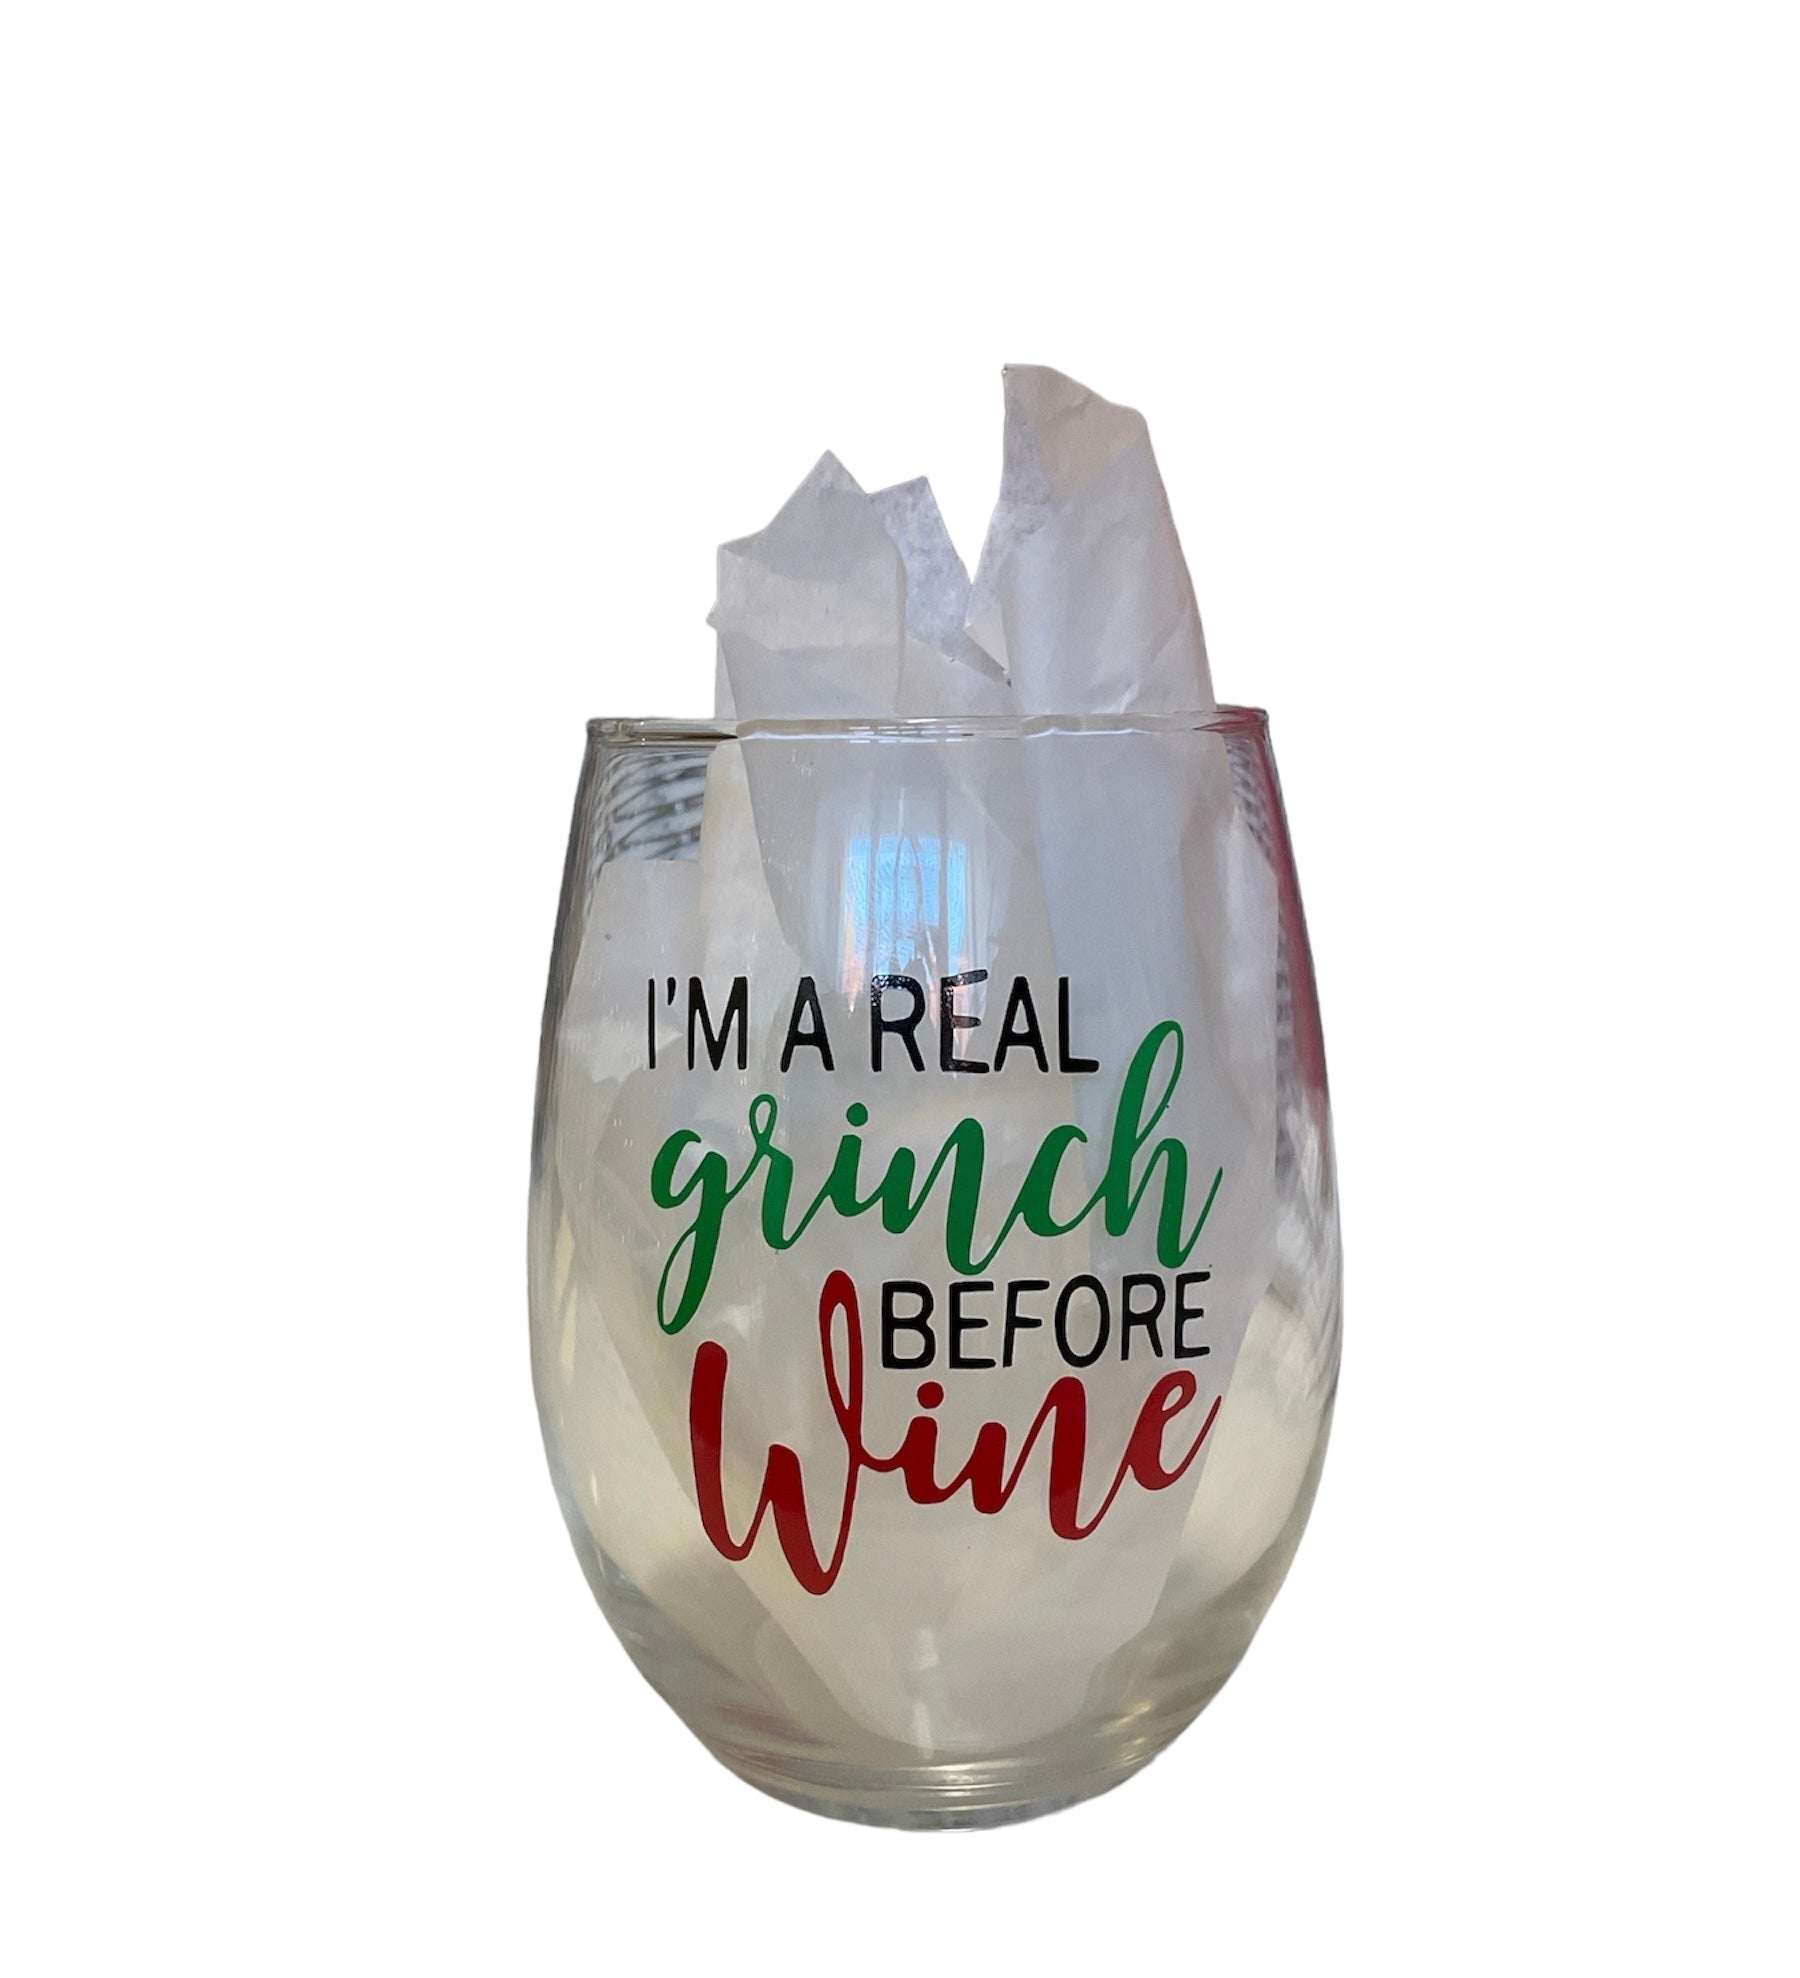 Grinch Before Wine Wine Glass